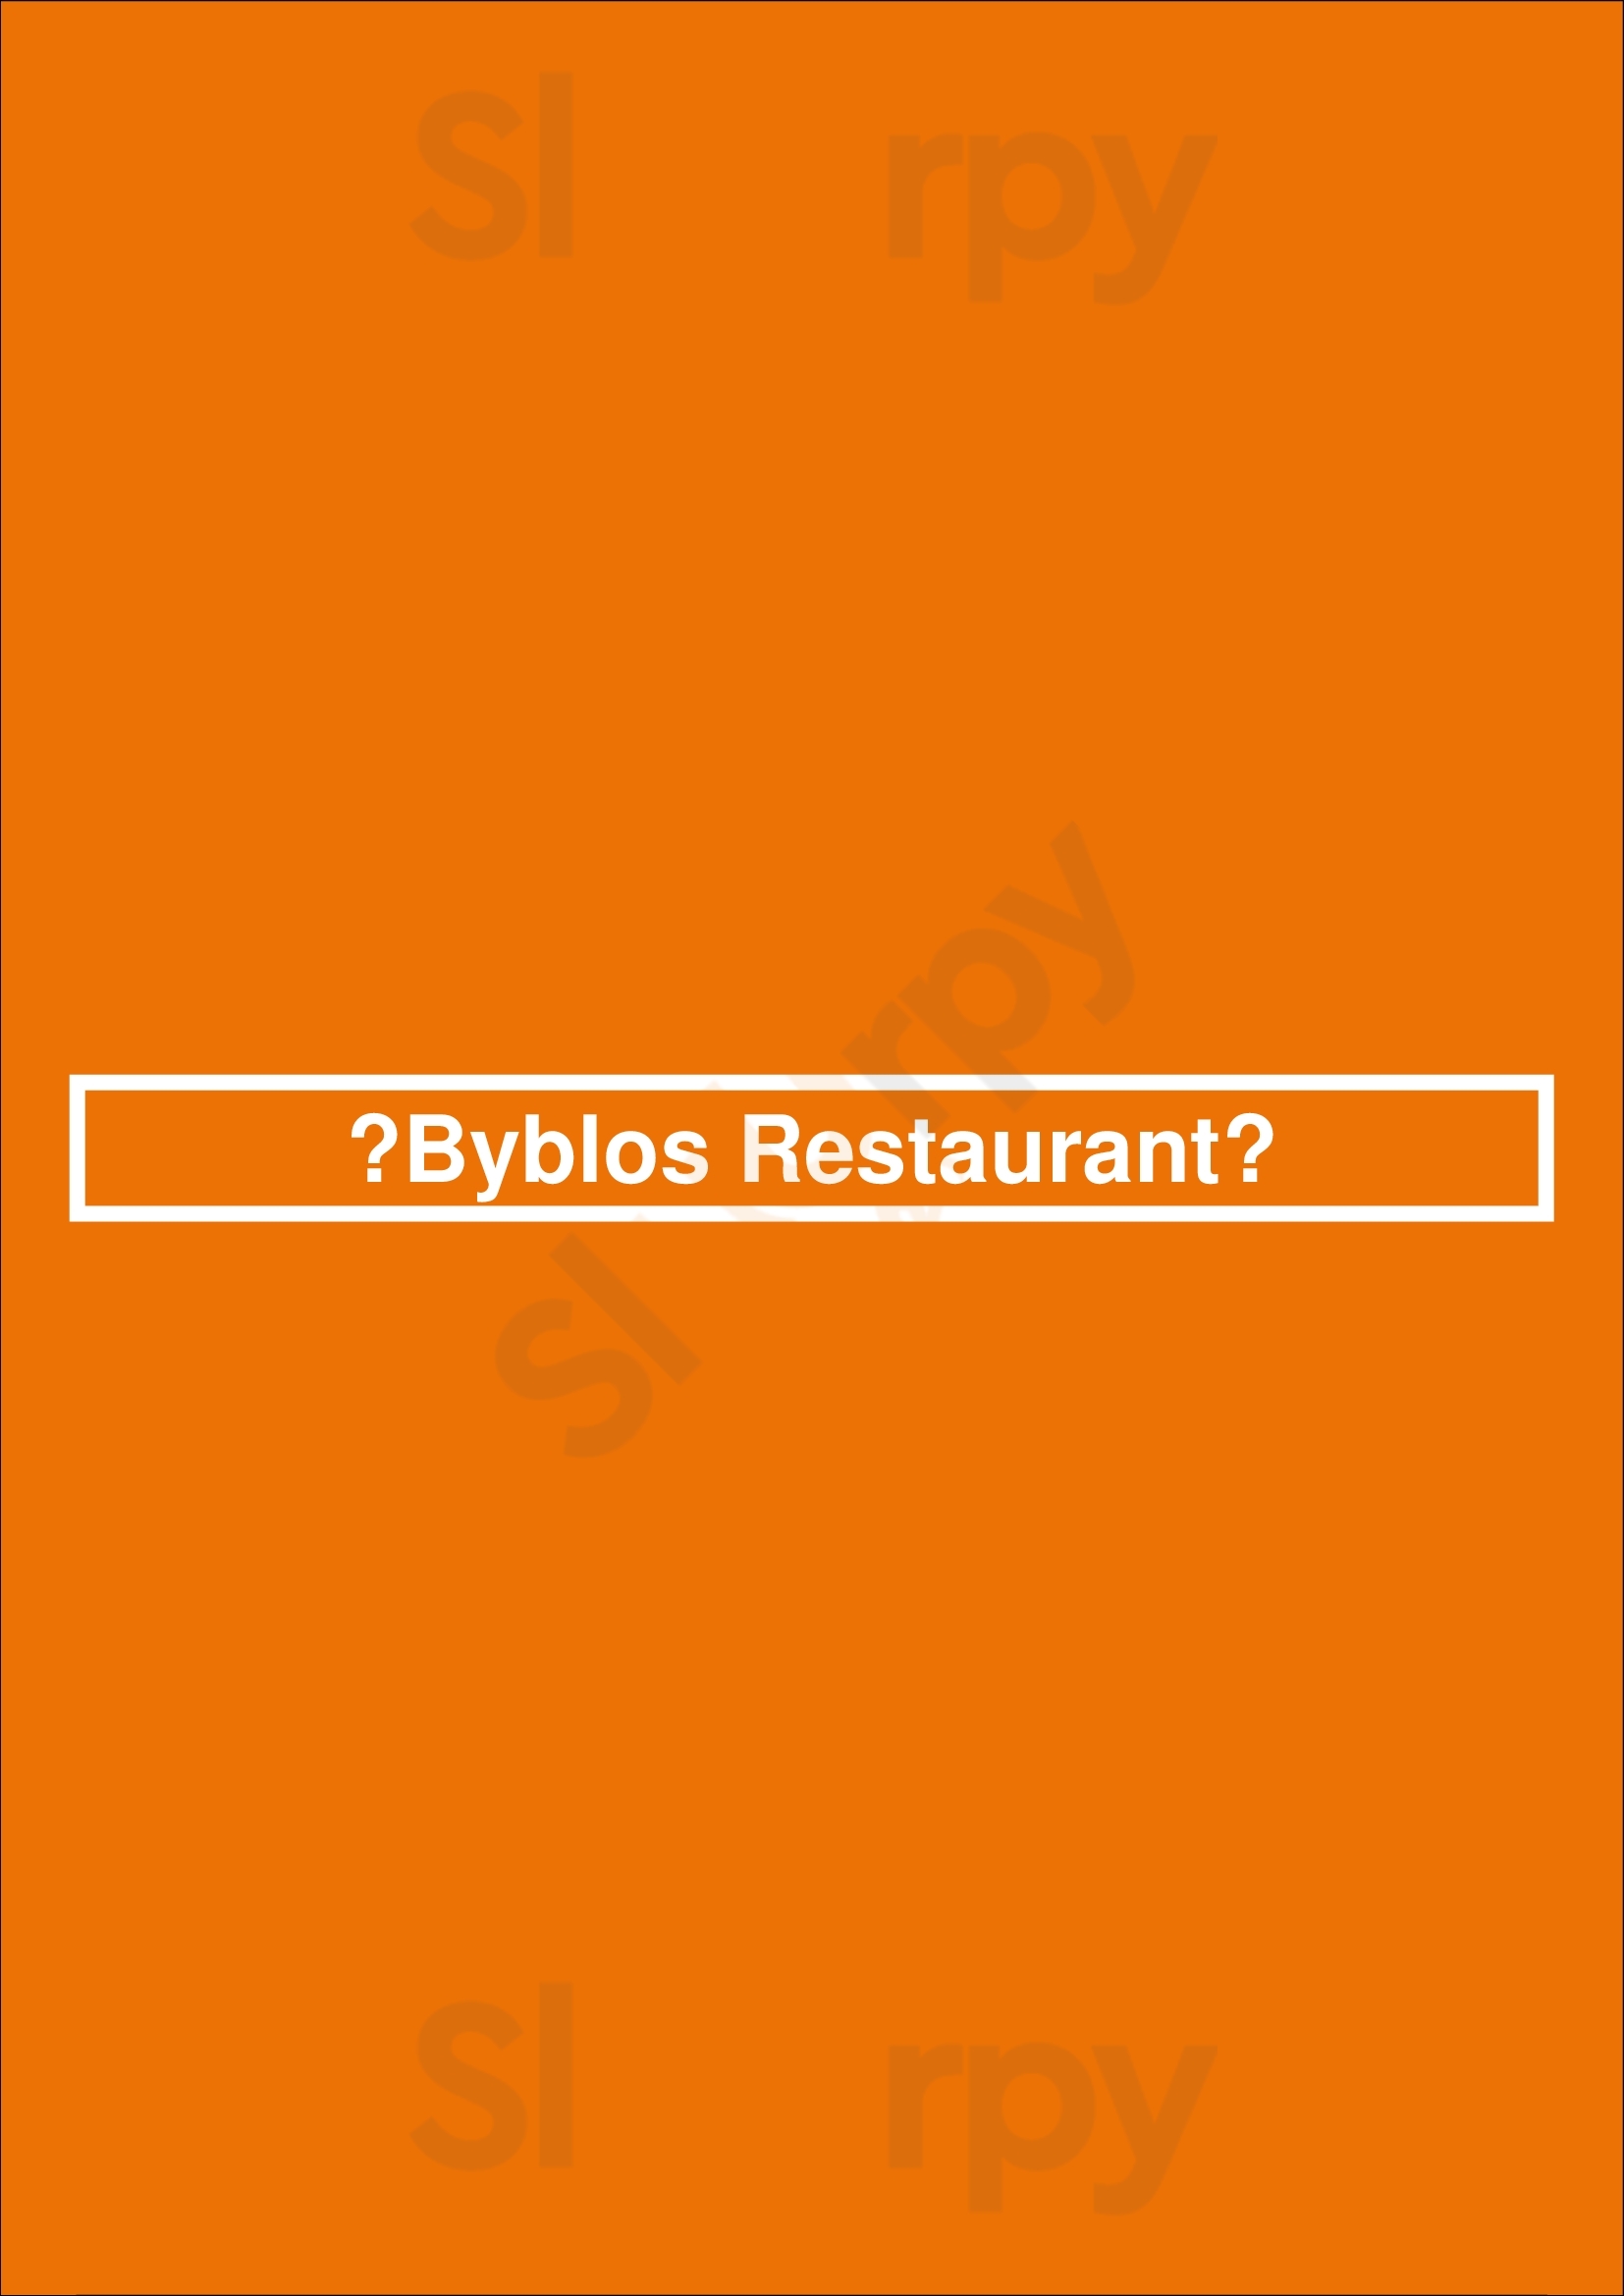 ‪byblos Restaurant‬ الإسكندرية Menu - 1